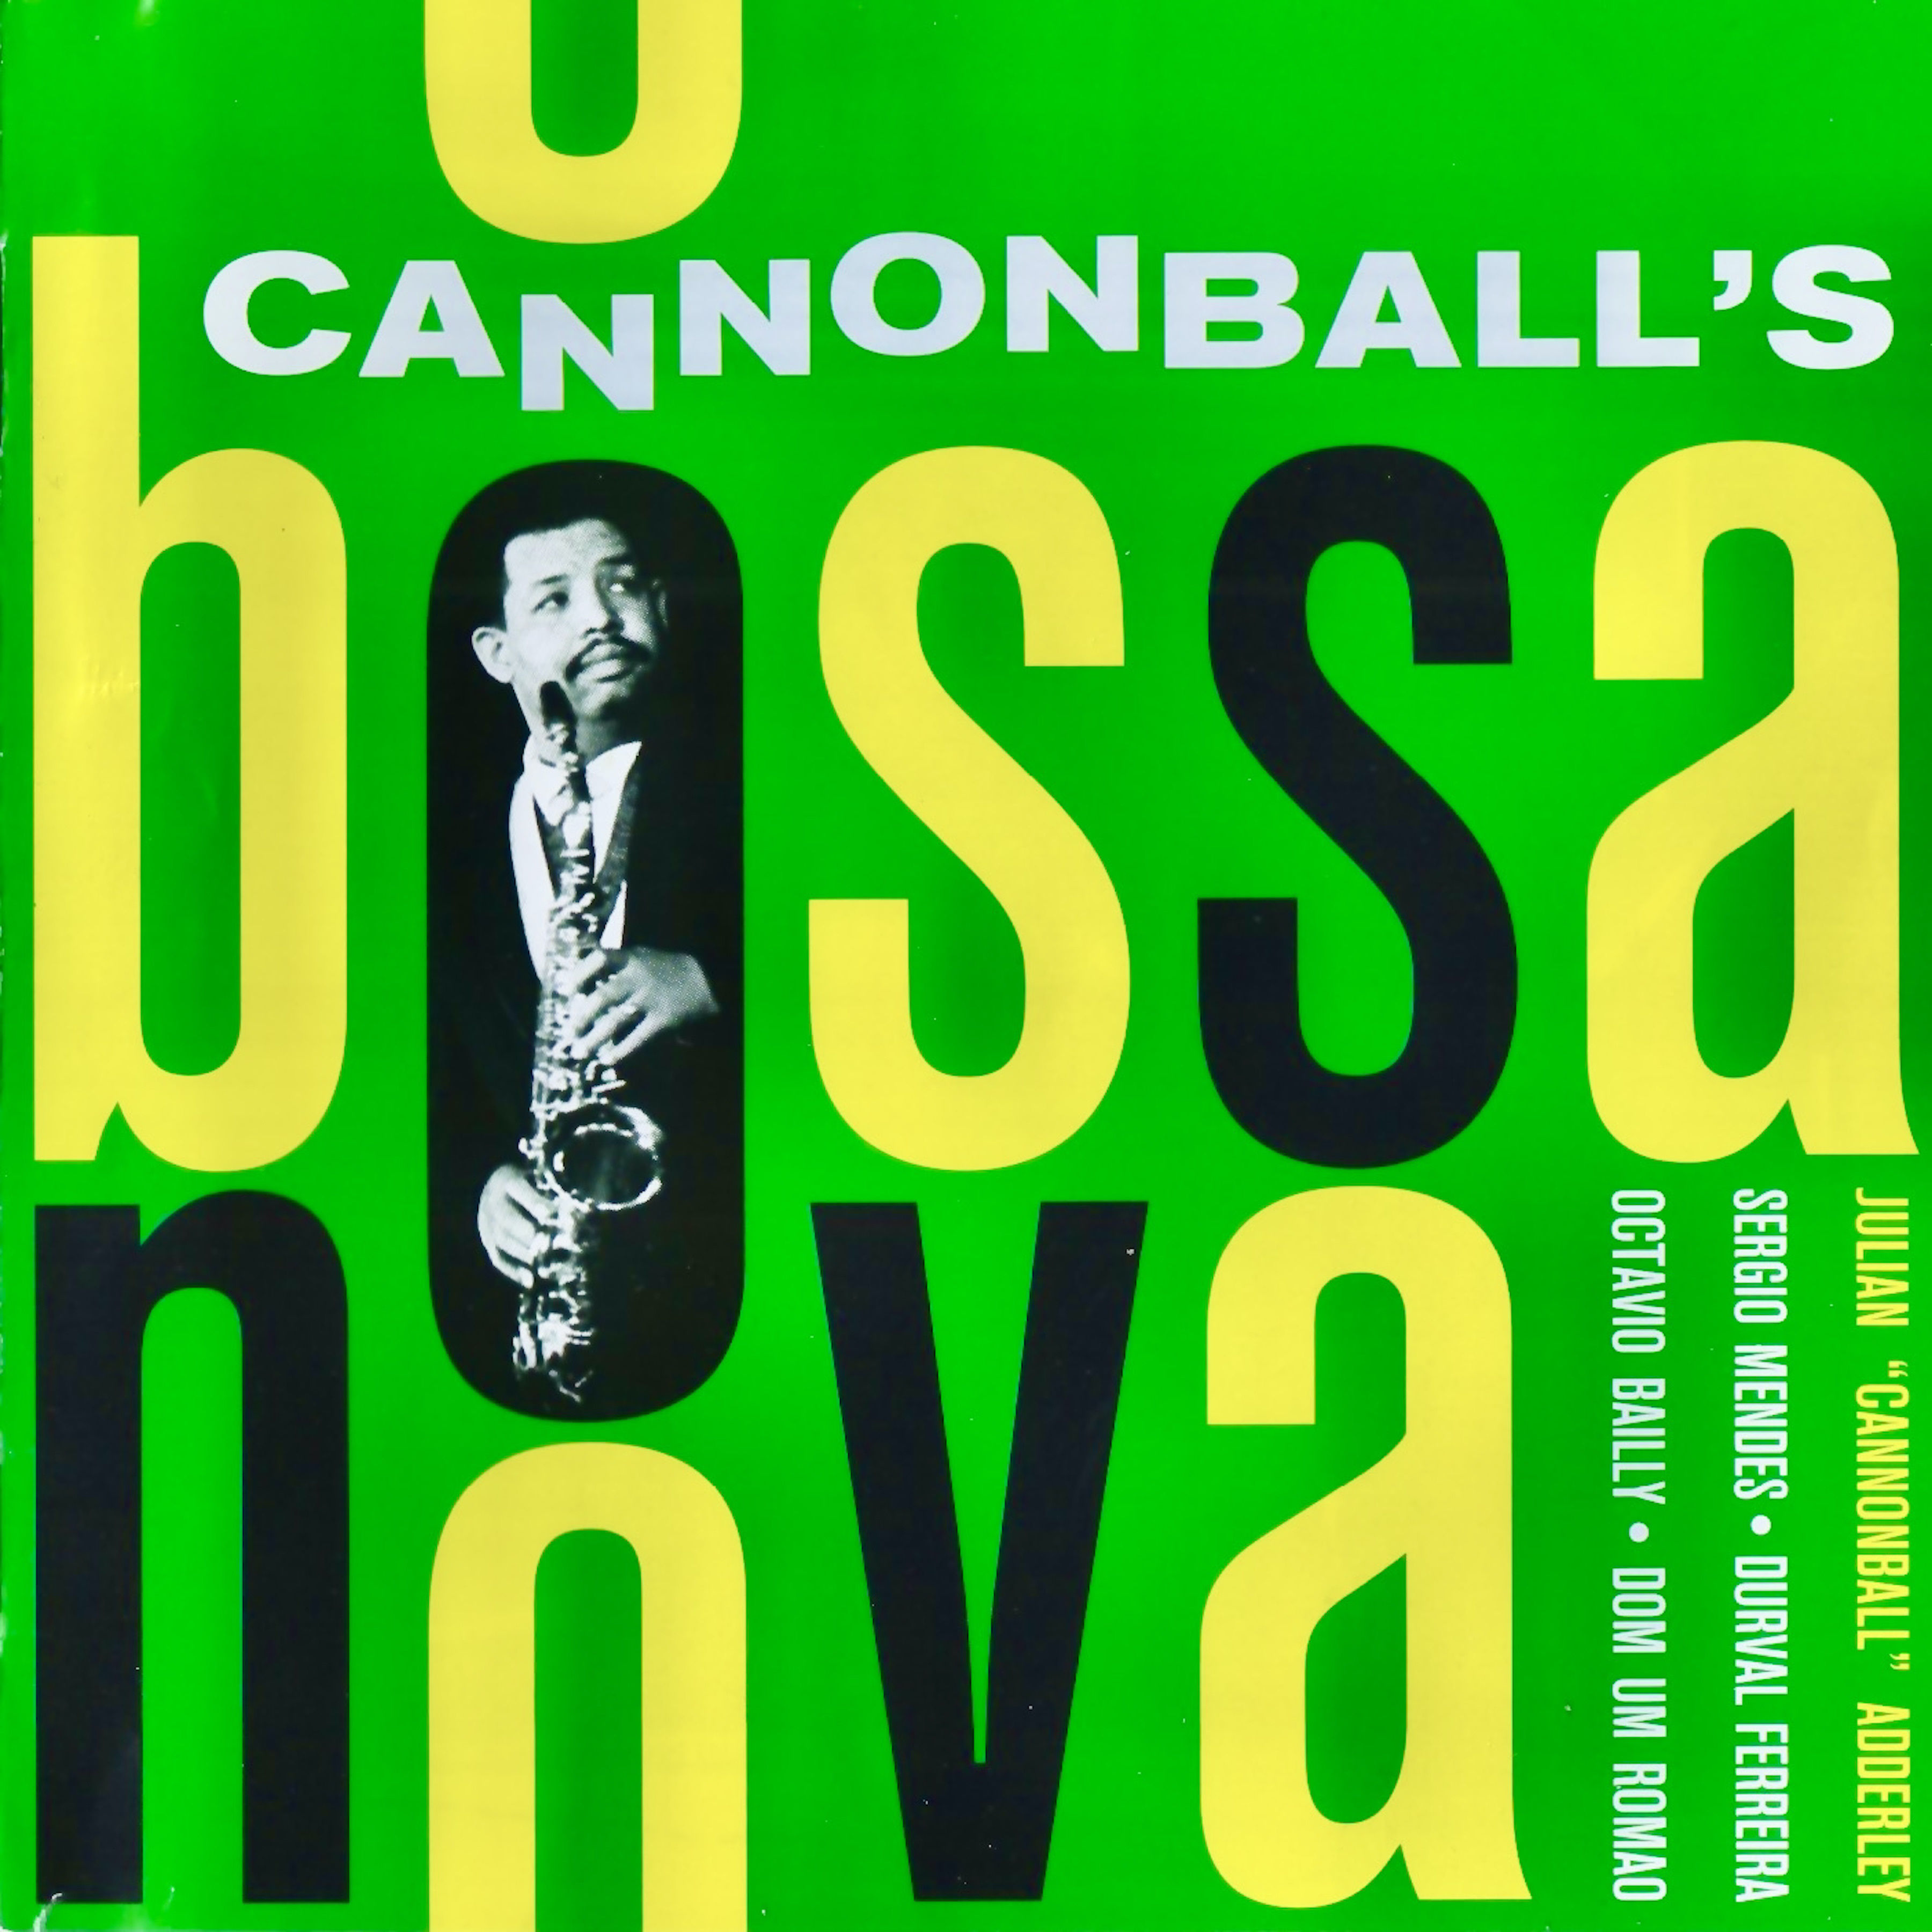 Cannonball Adderley - Cannonball’s Bossa Nova! (1962/2021) [FLAC 24bit/96kHz]